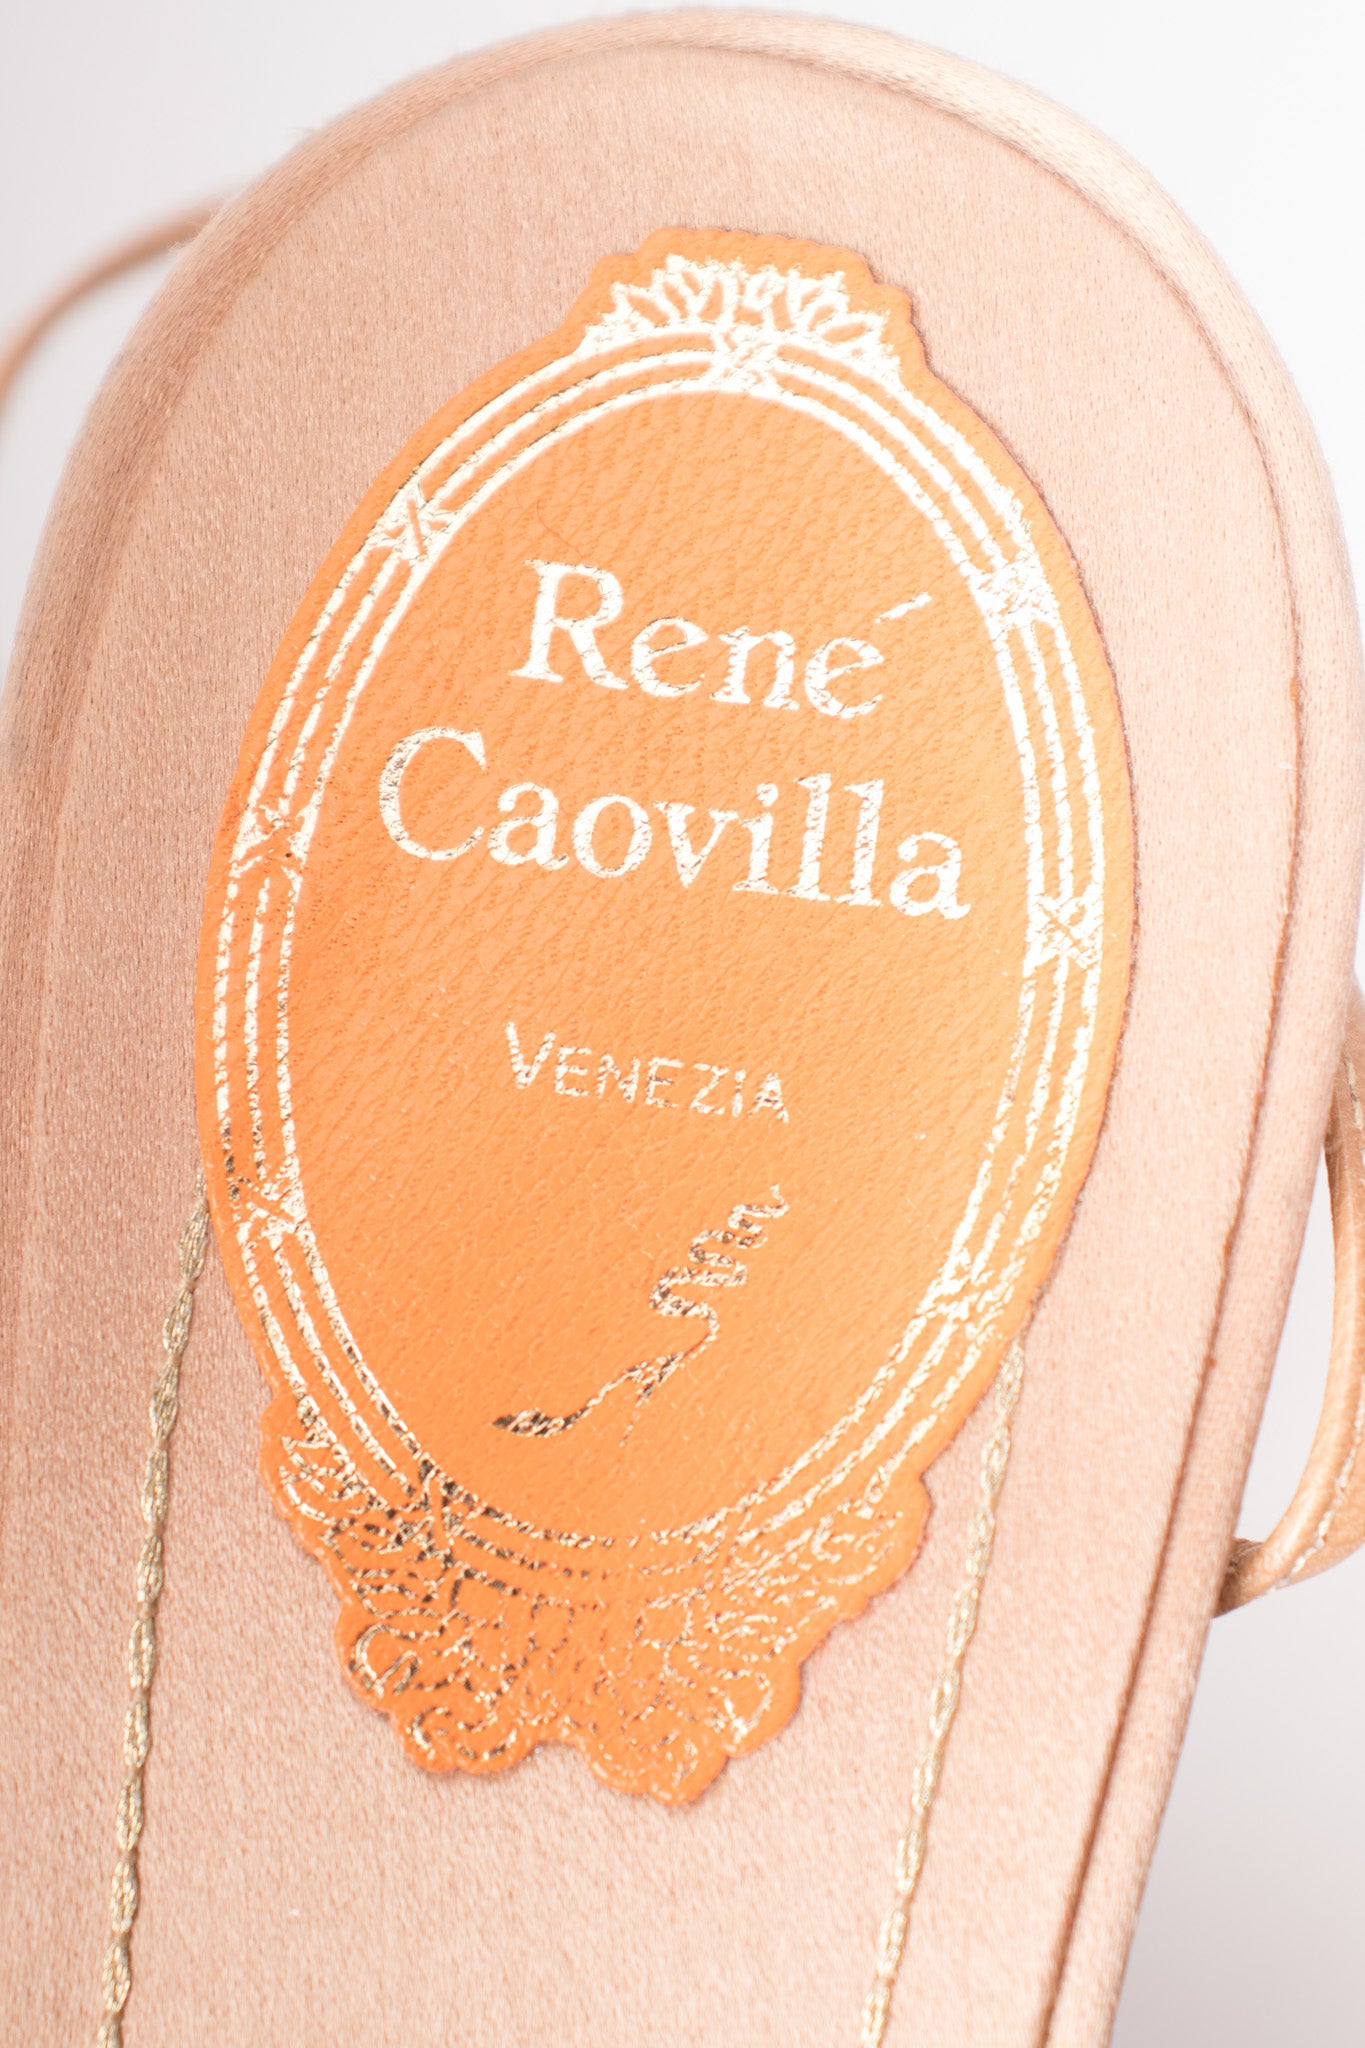 René Caovilla Vintage Rainbow Beaded Satin Ankle Wrap Mules Heels